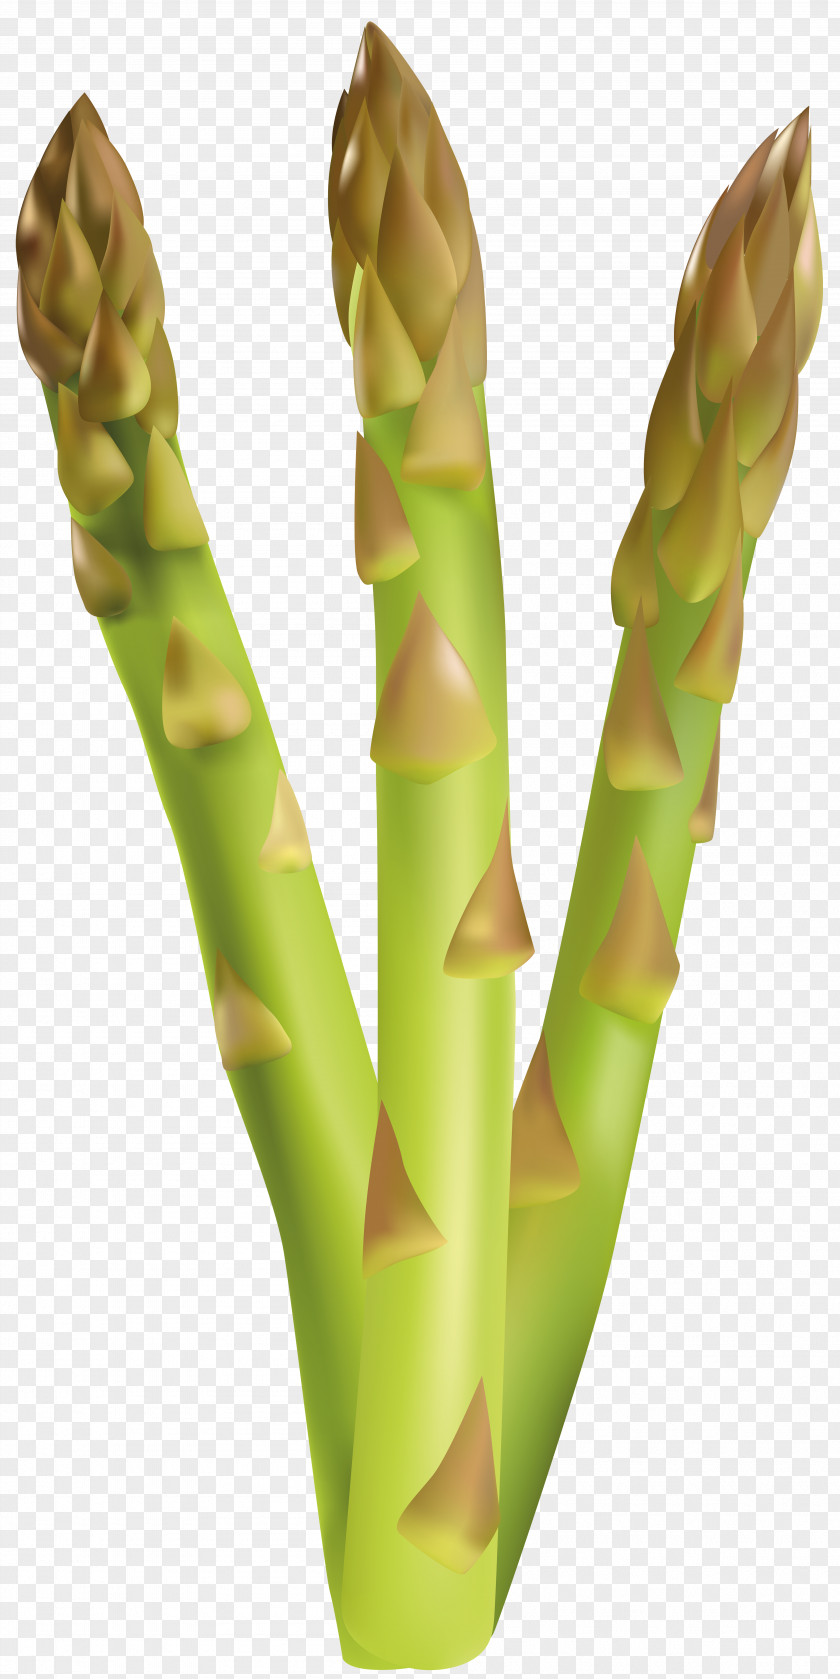 Asparagus Free Clip Art Image Vegetable PNG